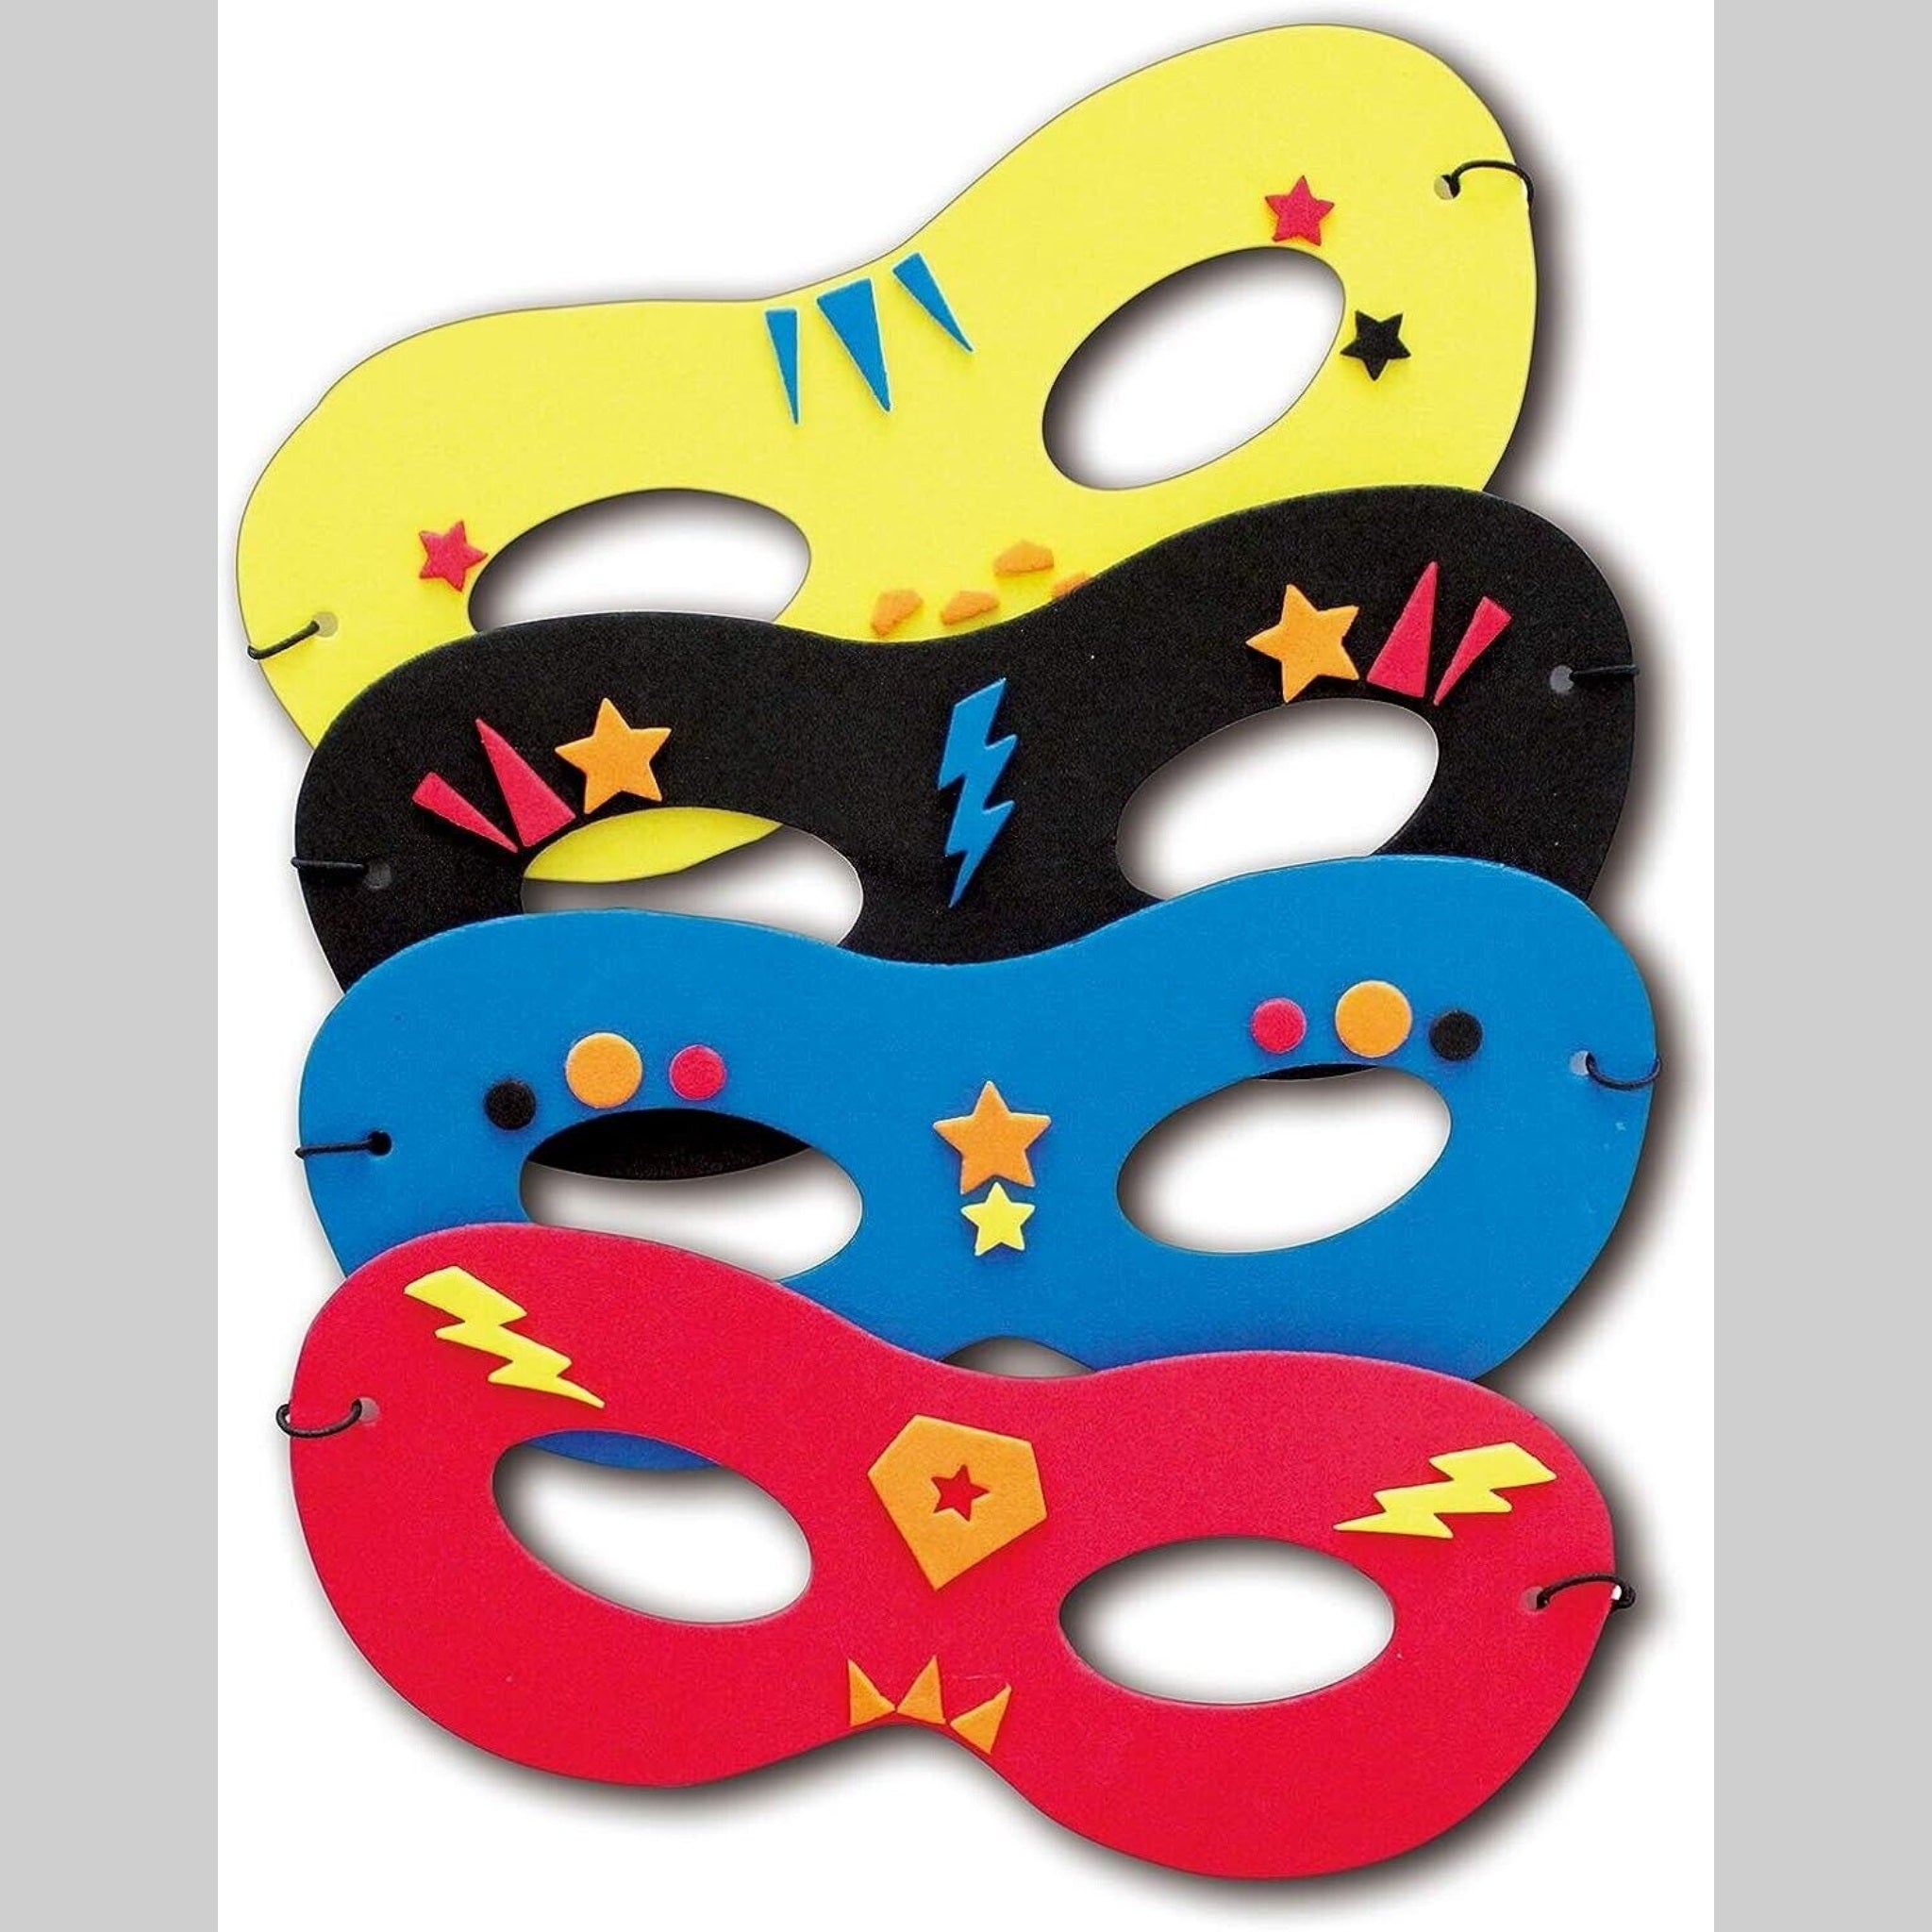 Beclan Harp Make Your Own Kids Foam Face Masks Superhero Felt Craft Kit Mask With Elastic Band Children Kids Party Fun